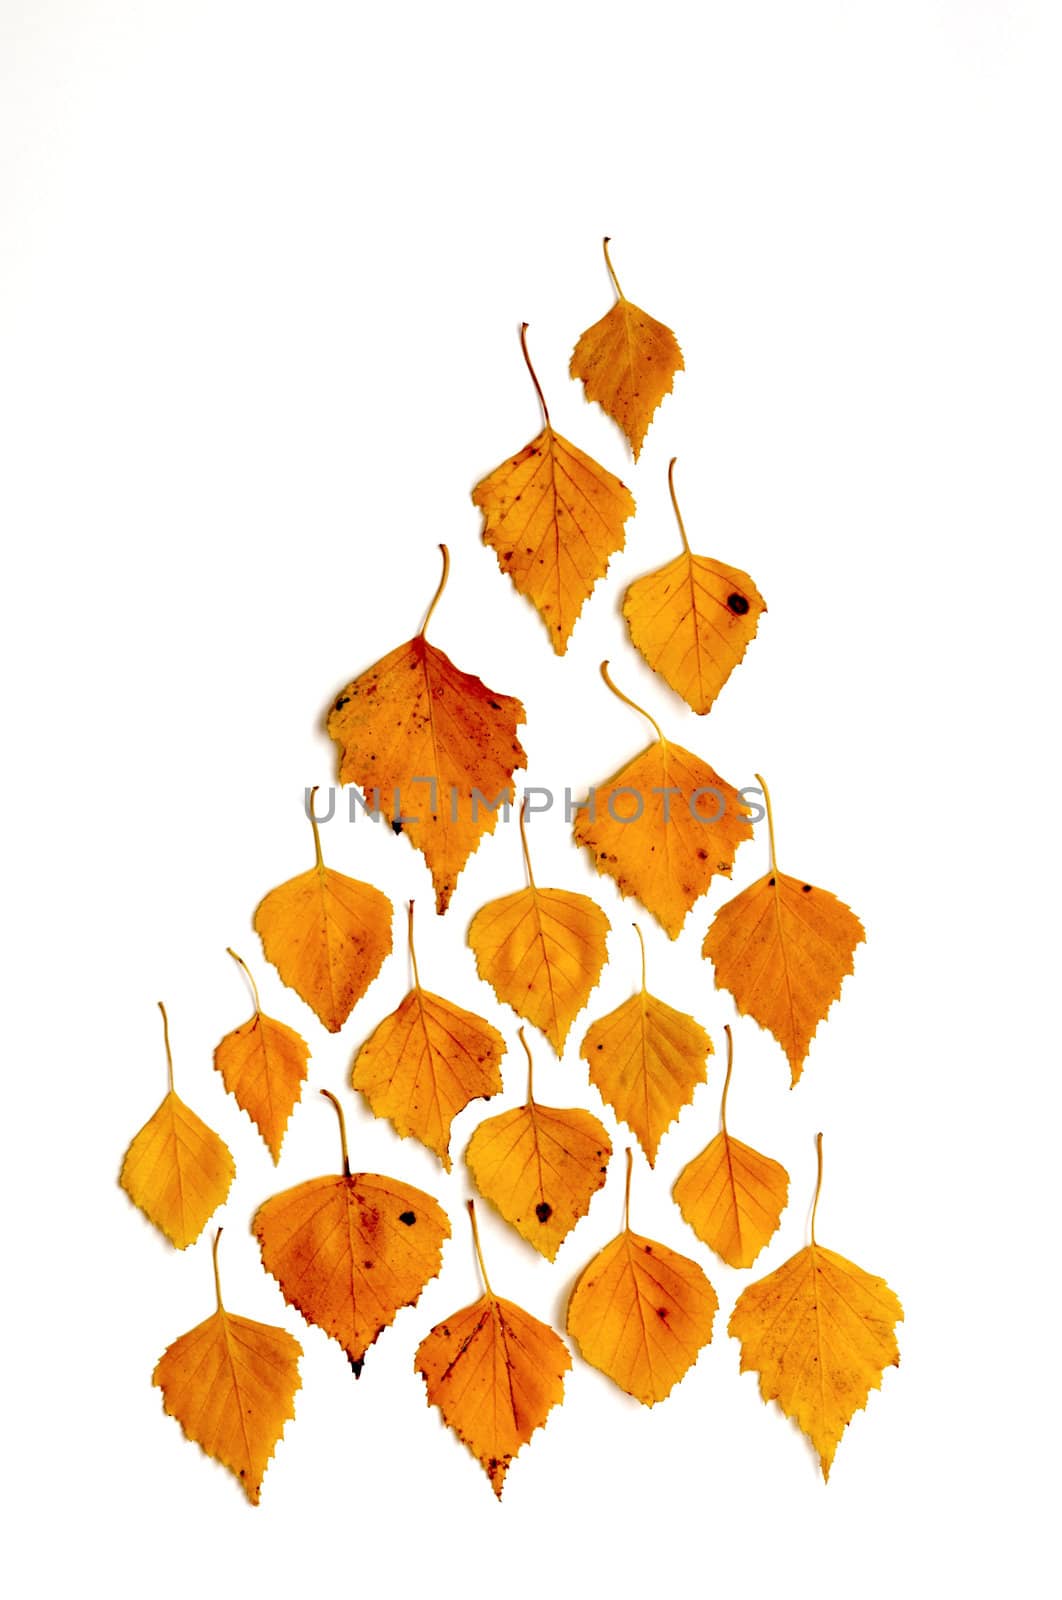 Background of leaves by velkol